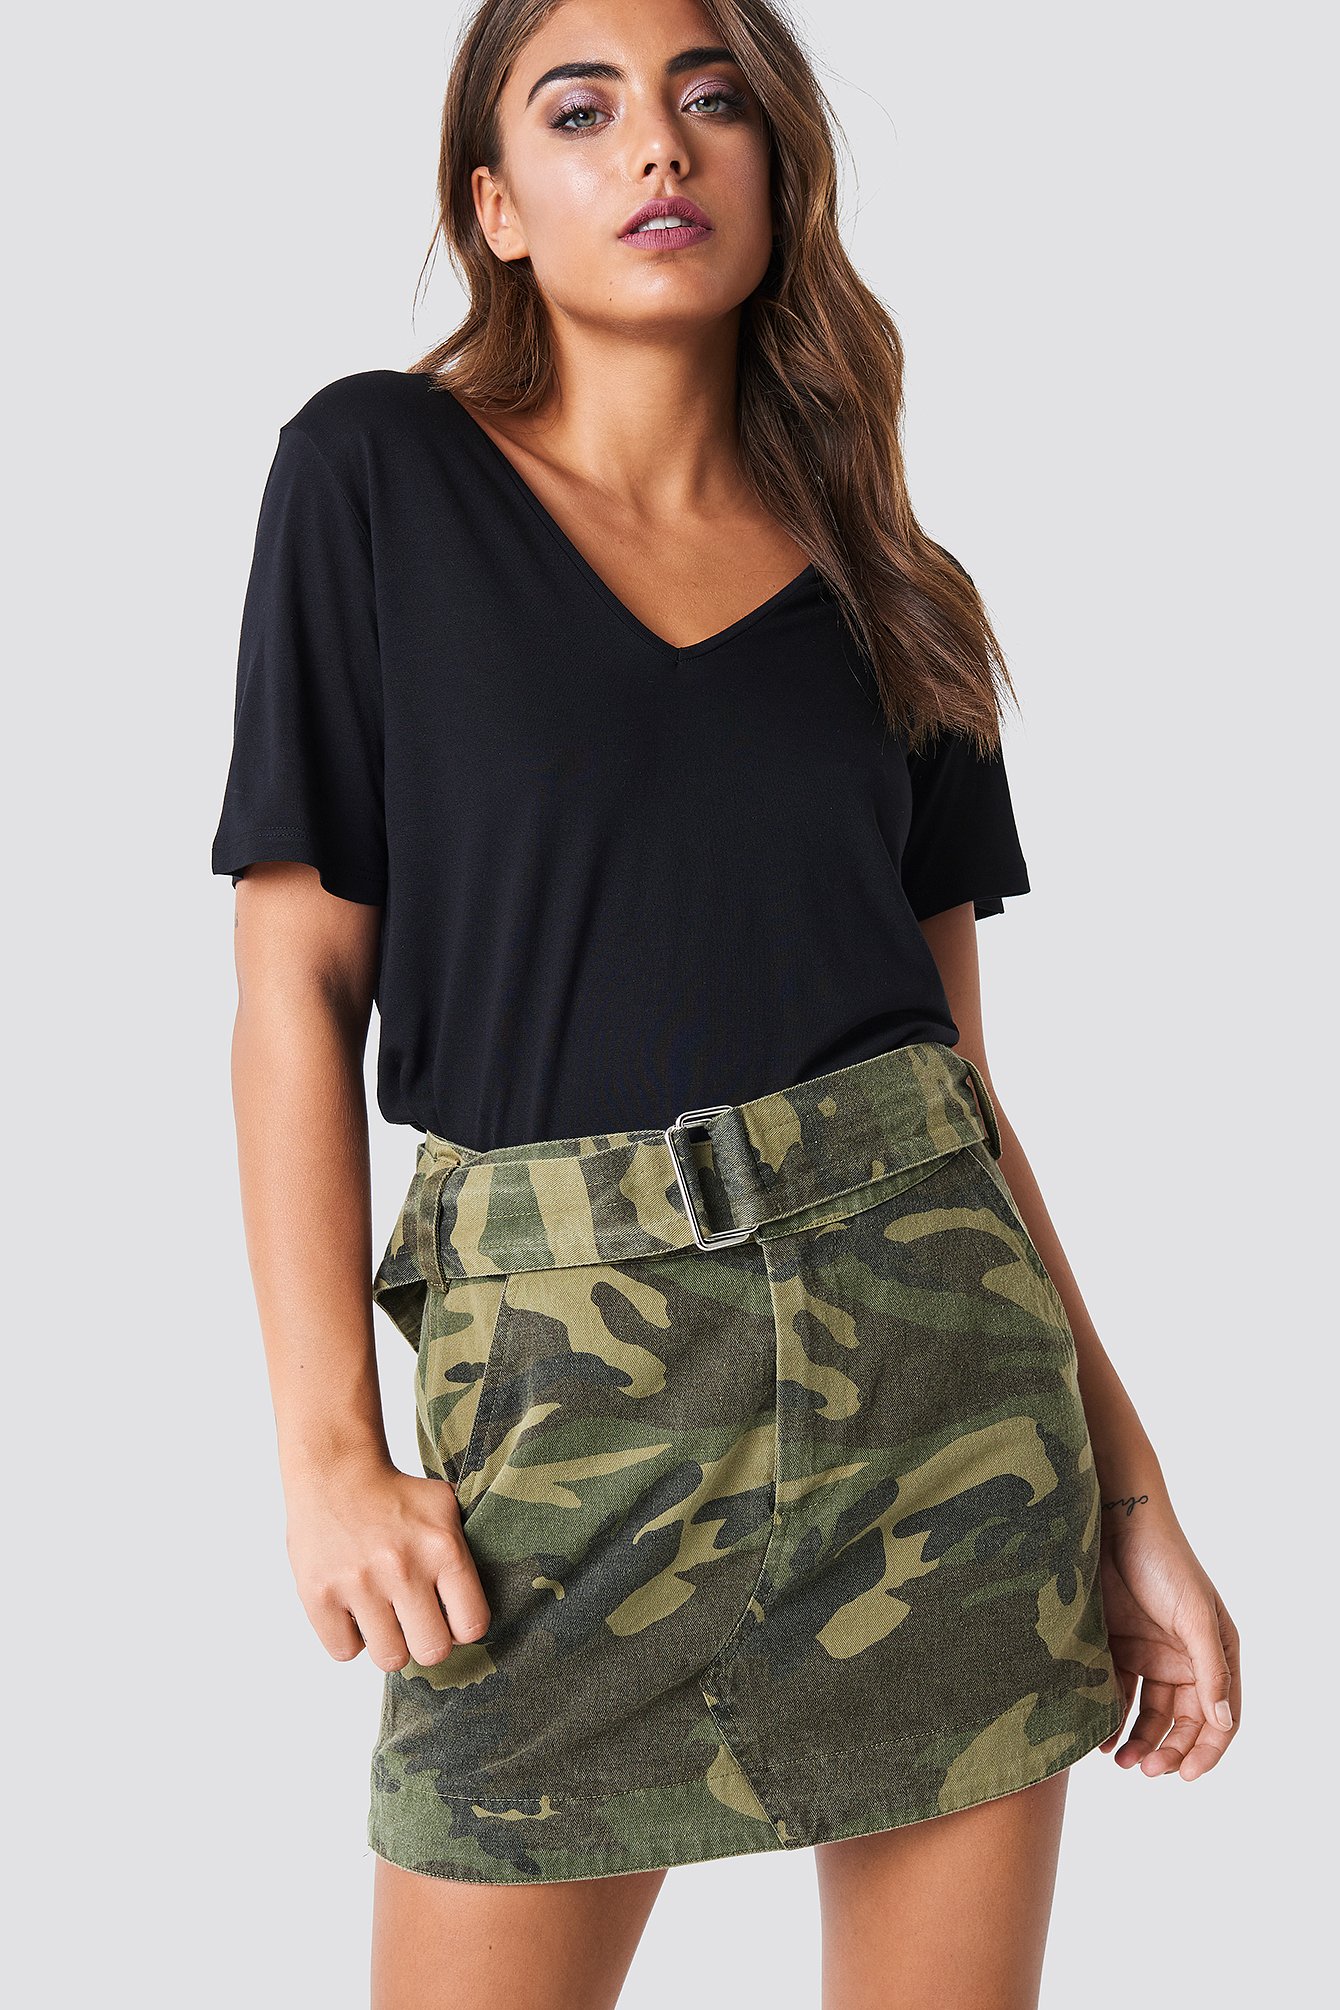 Army NA-KD Trend Army Printed Mini Skirt